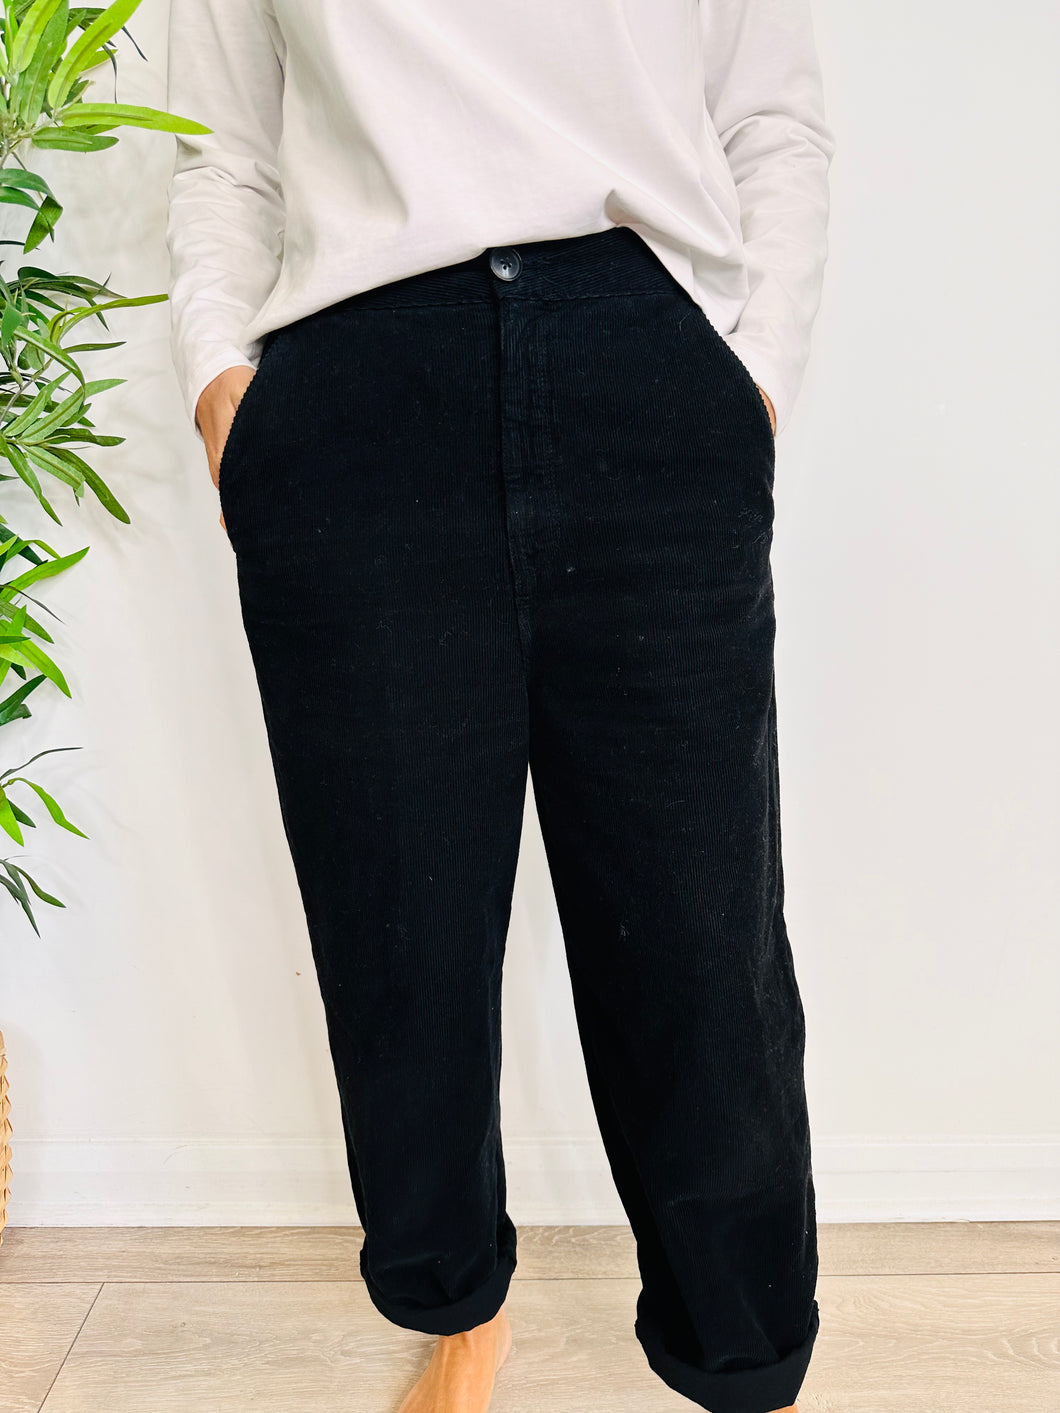 Pasop Cord Trousers - Size 1